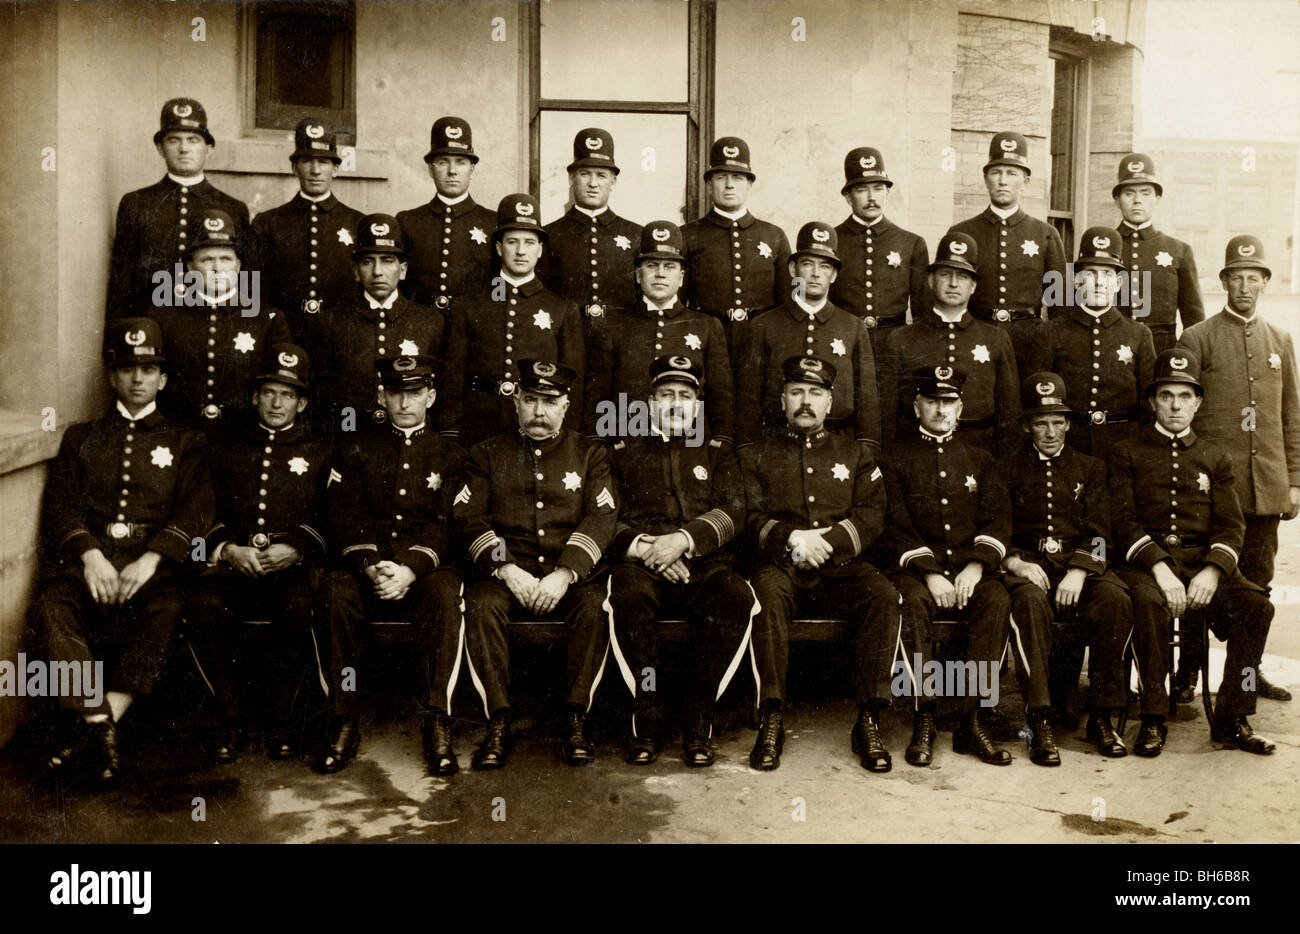 Twenty-six Police Officers Group Portrait Stock Photo